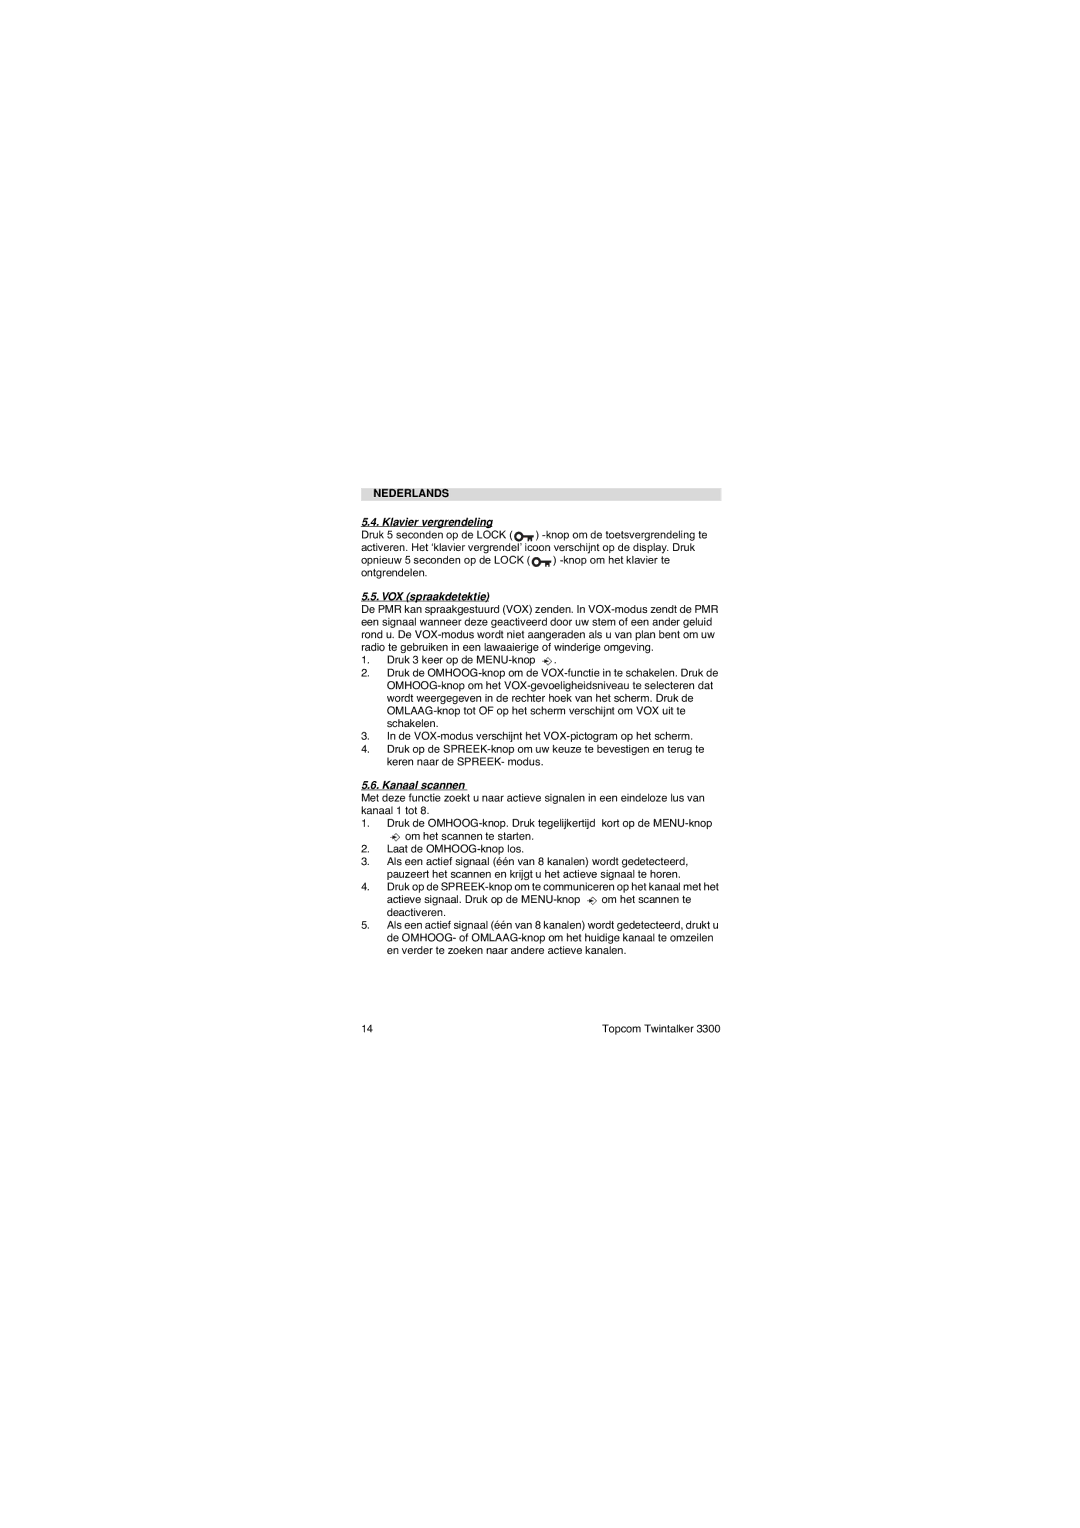 Topcom 3300 user manual Klavier vergrendeling, VOX spraakdetektie, Kanaal scannen 